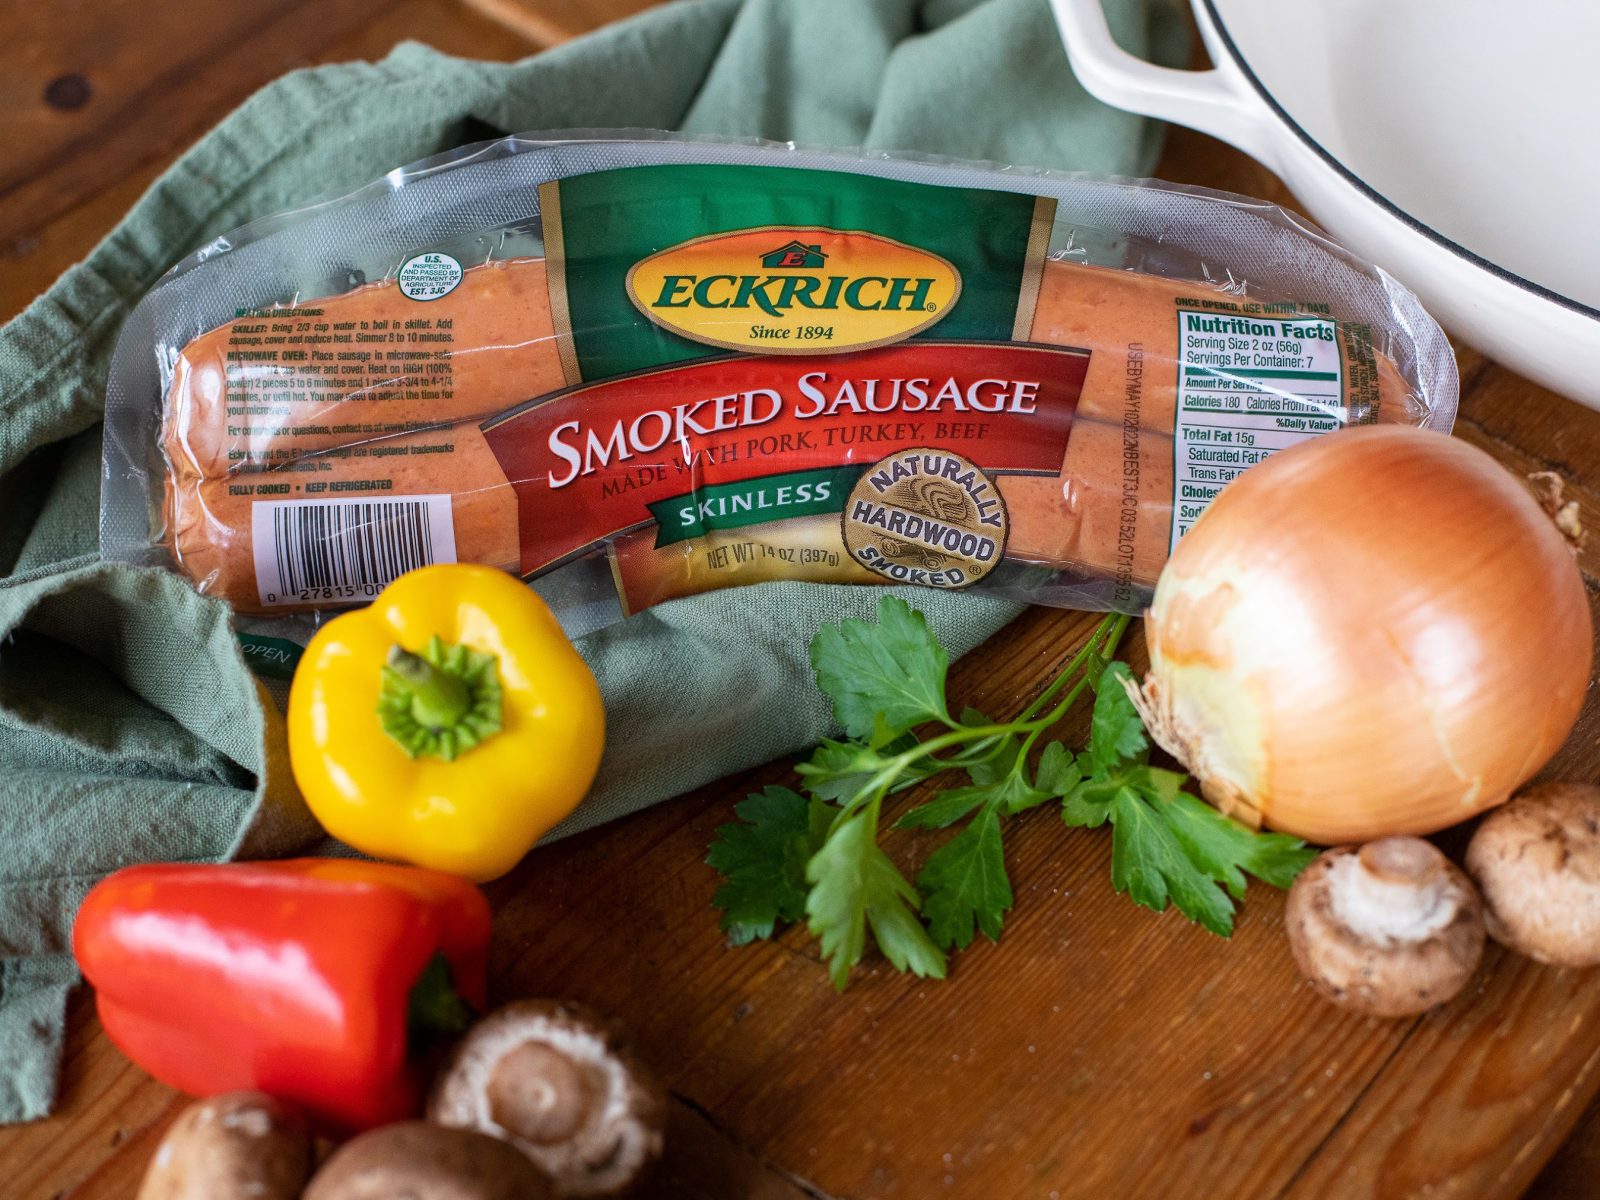 Grab Eckrich Smoked Sausage For $2.49 At Kroger